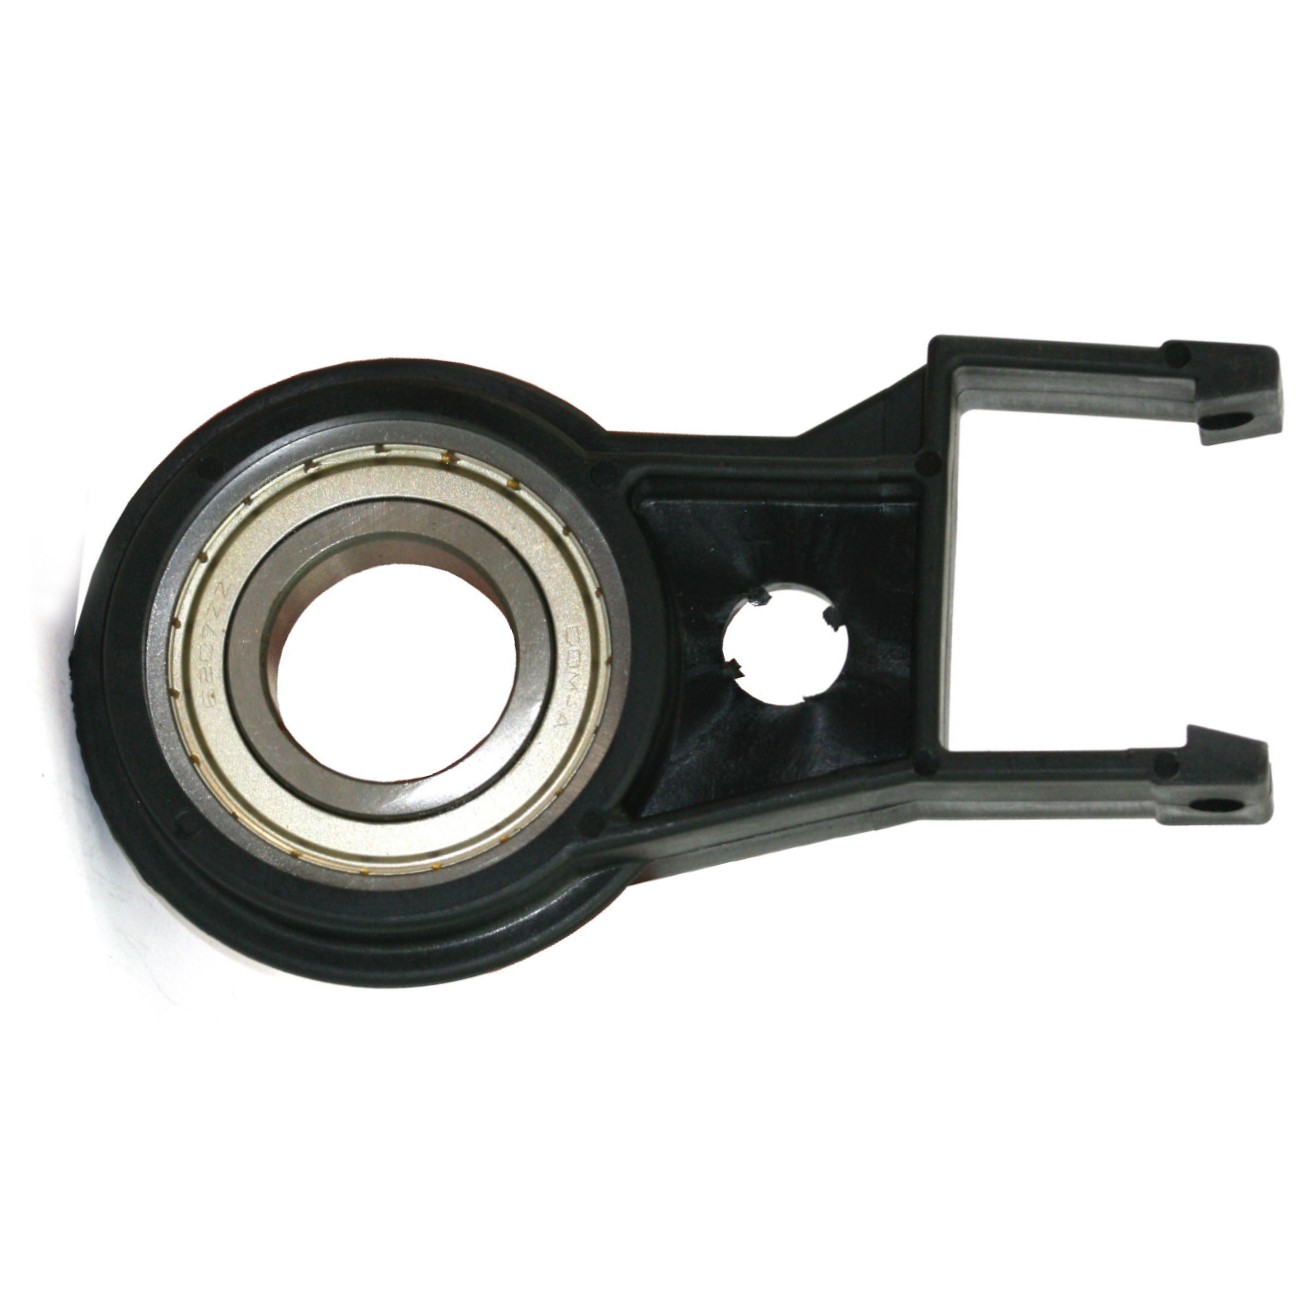 Offset bearing 1" - 50/50 - PU = 25 pcs